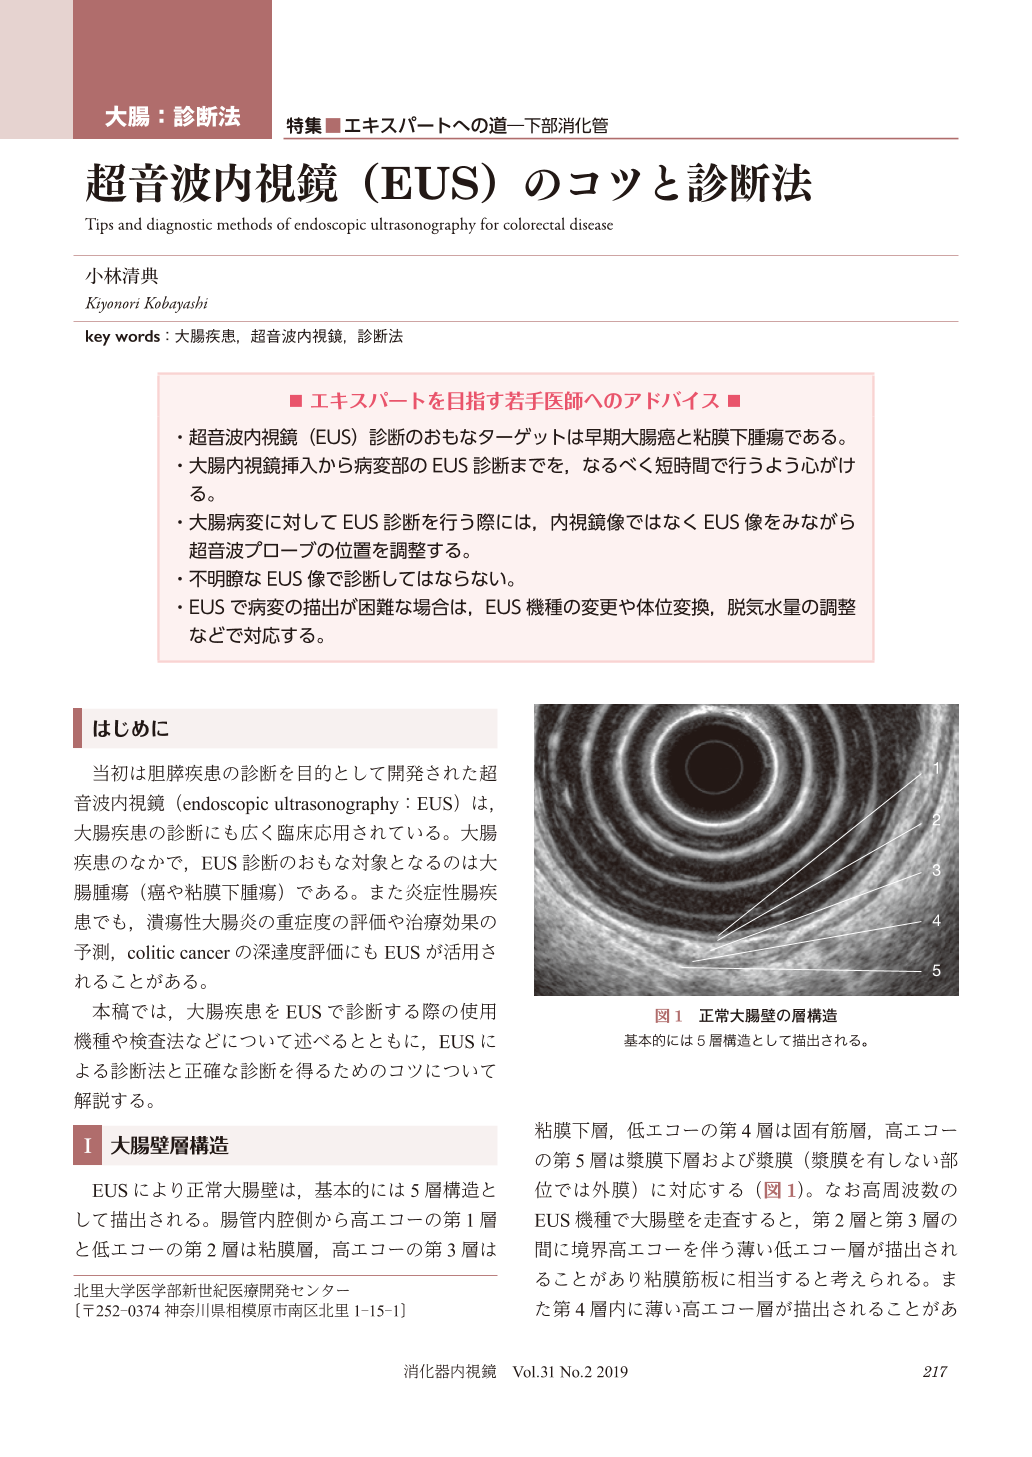 大腸 診断法 超音波内視鏡(EUS)のコツと診断法 (消化器内視鏡 31巻2号 